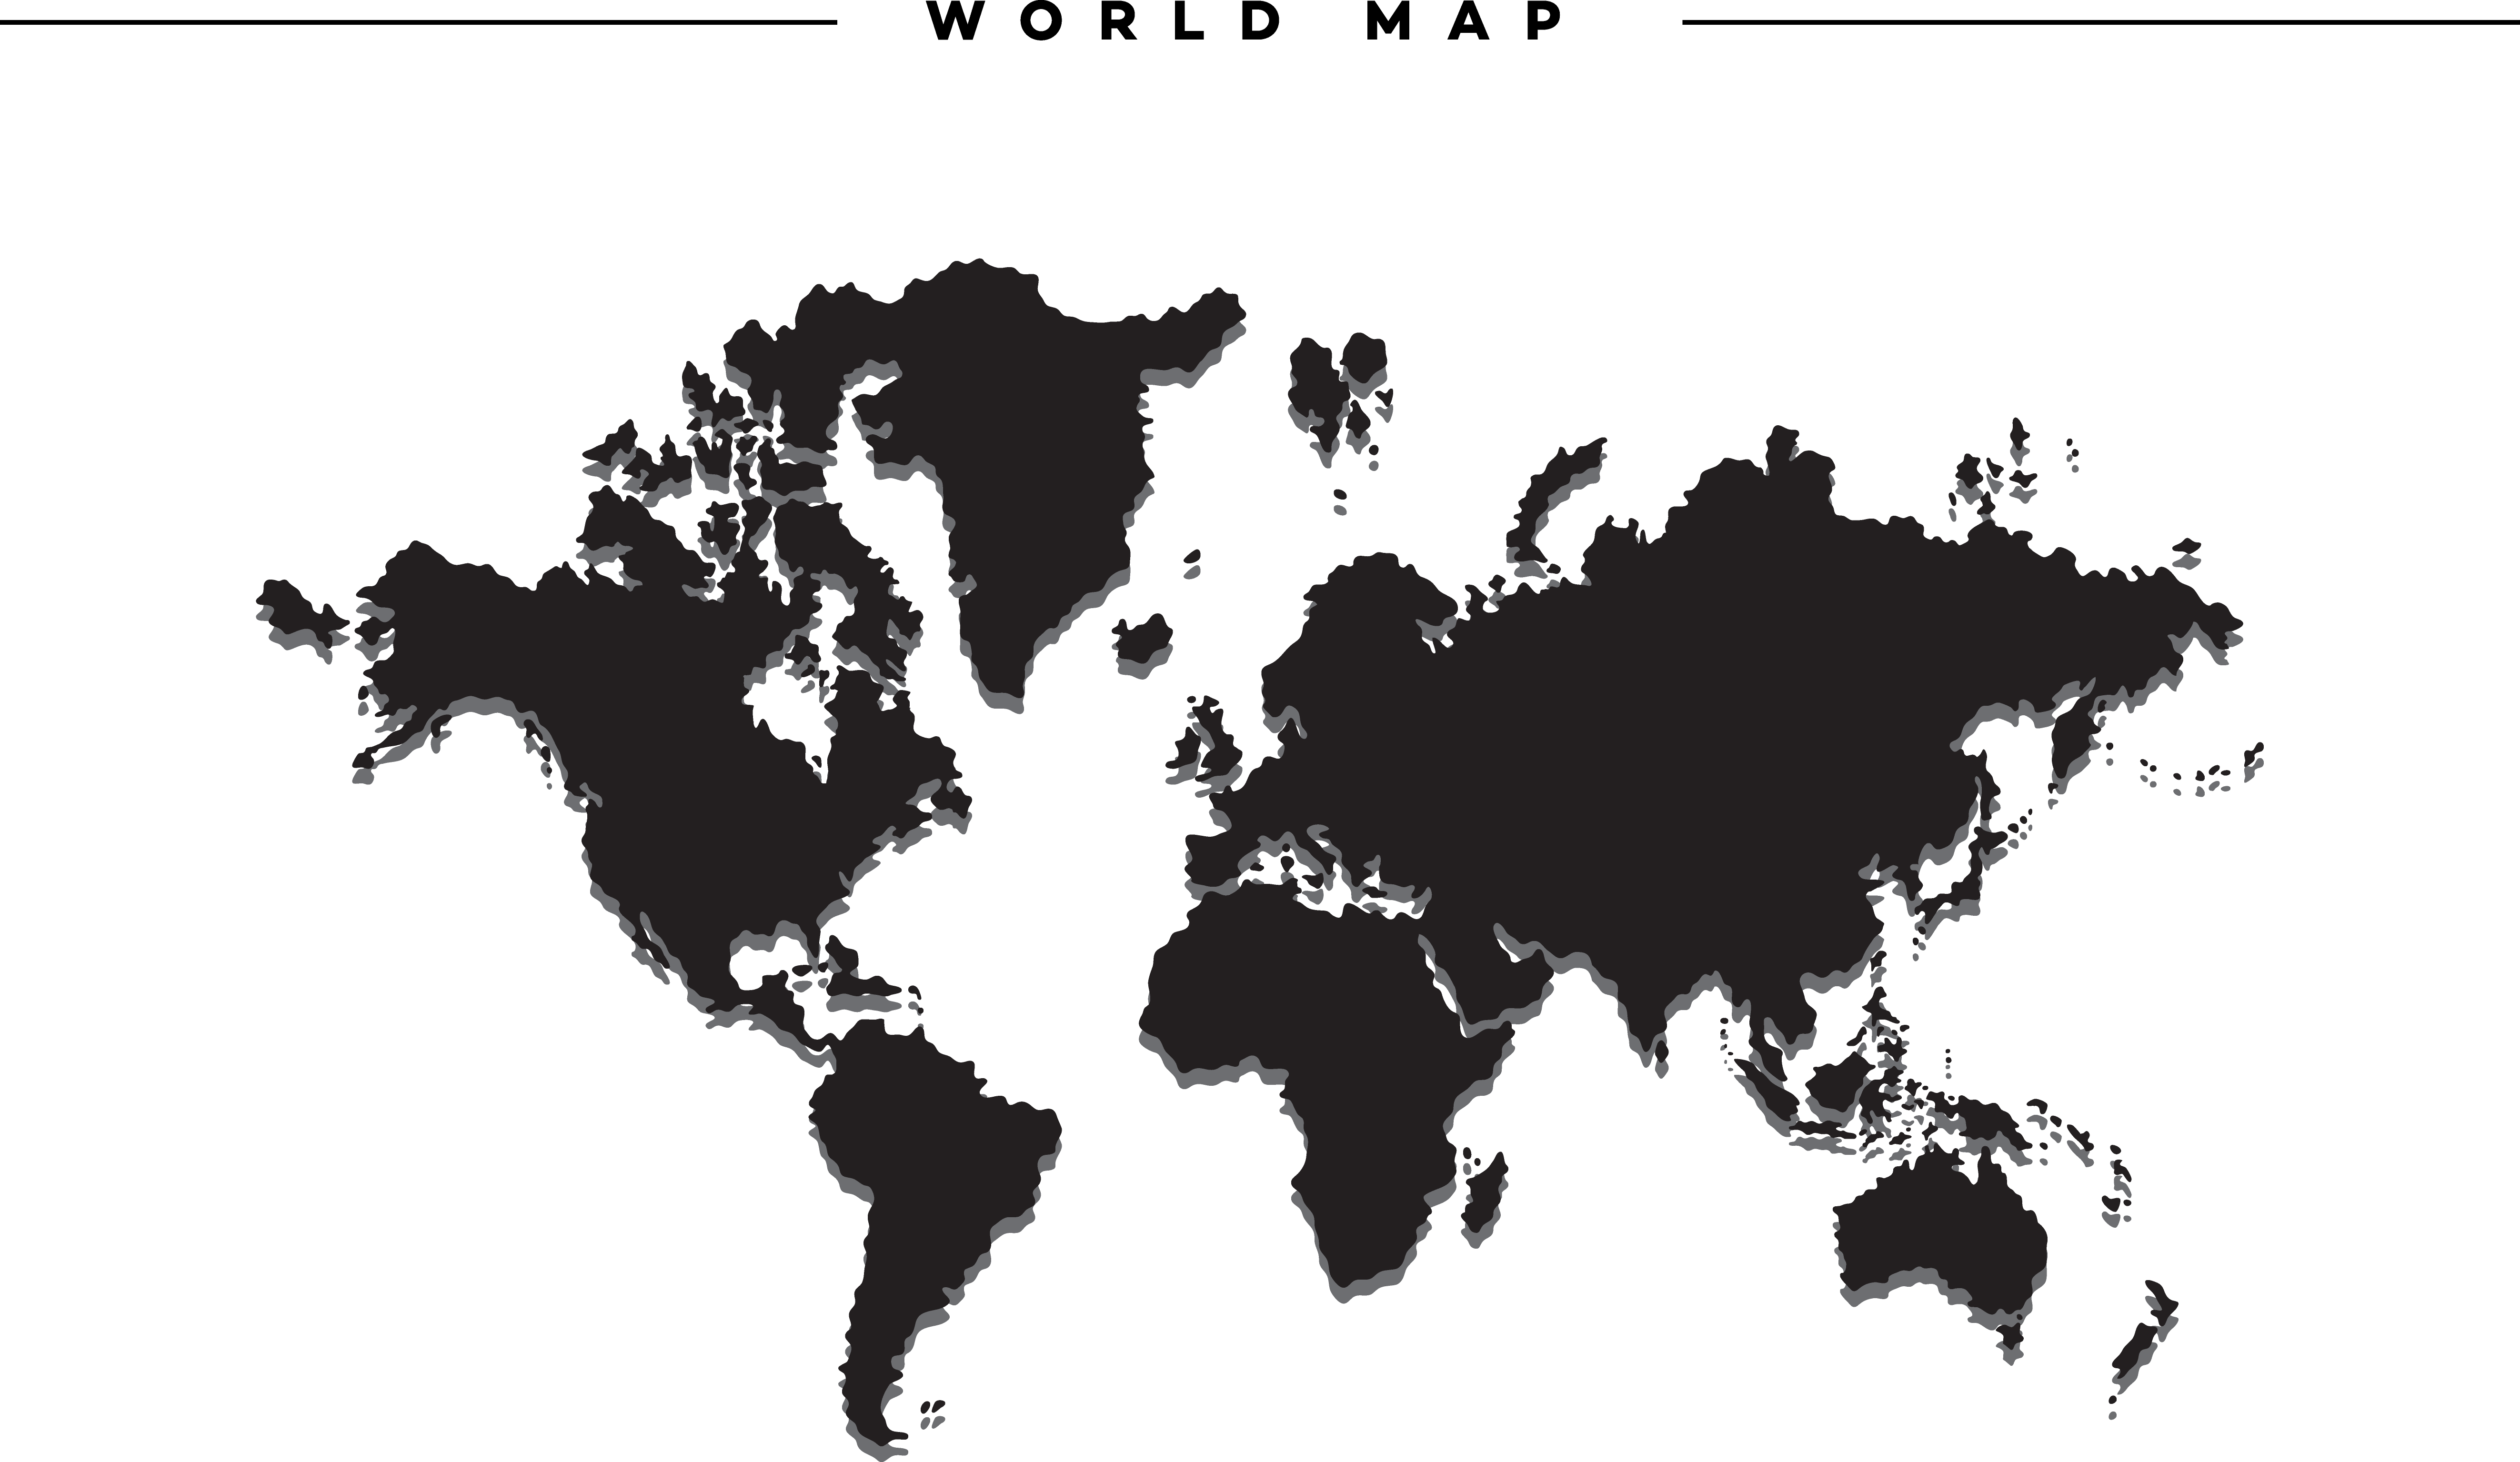 World map Globe